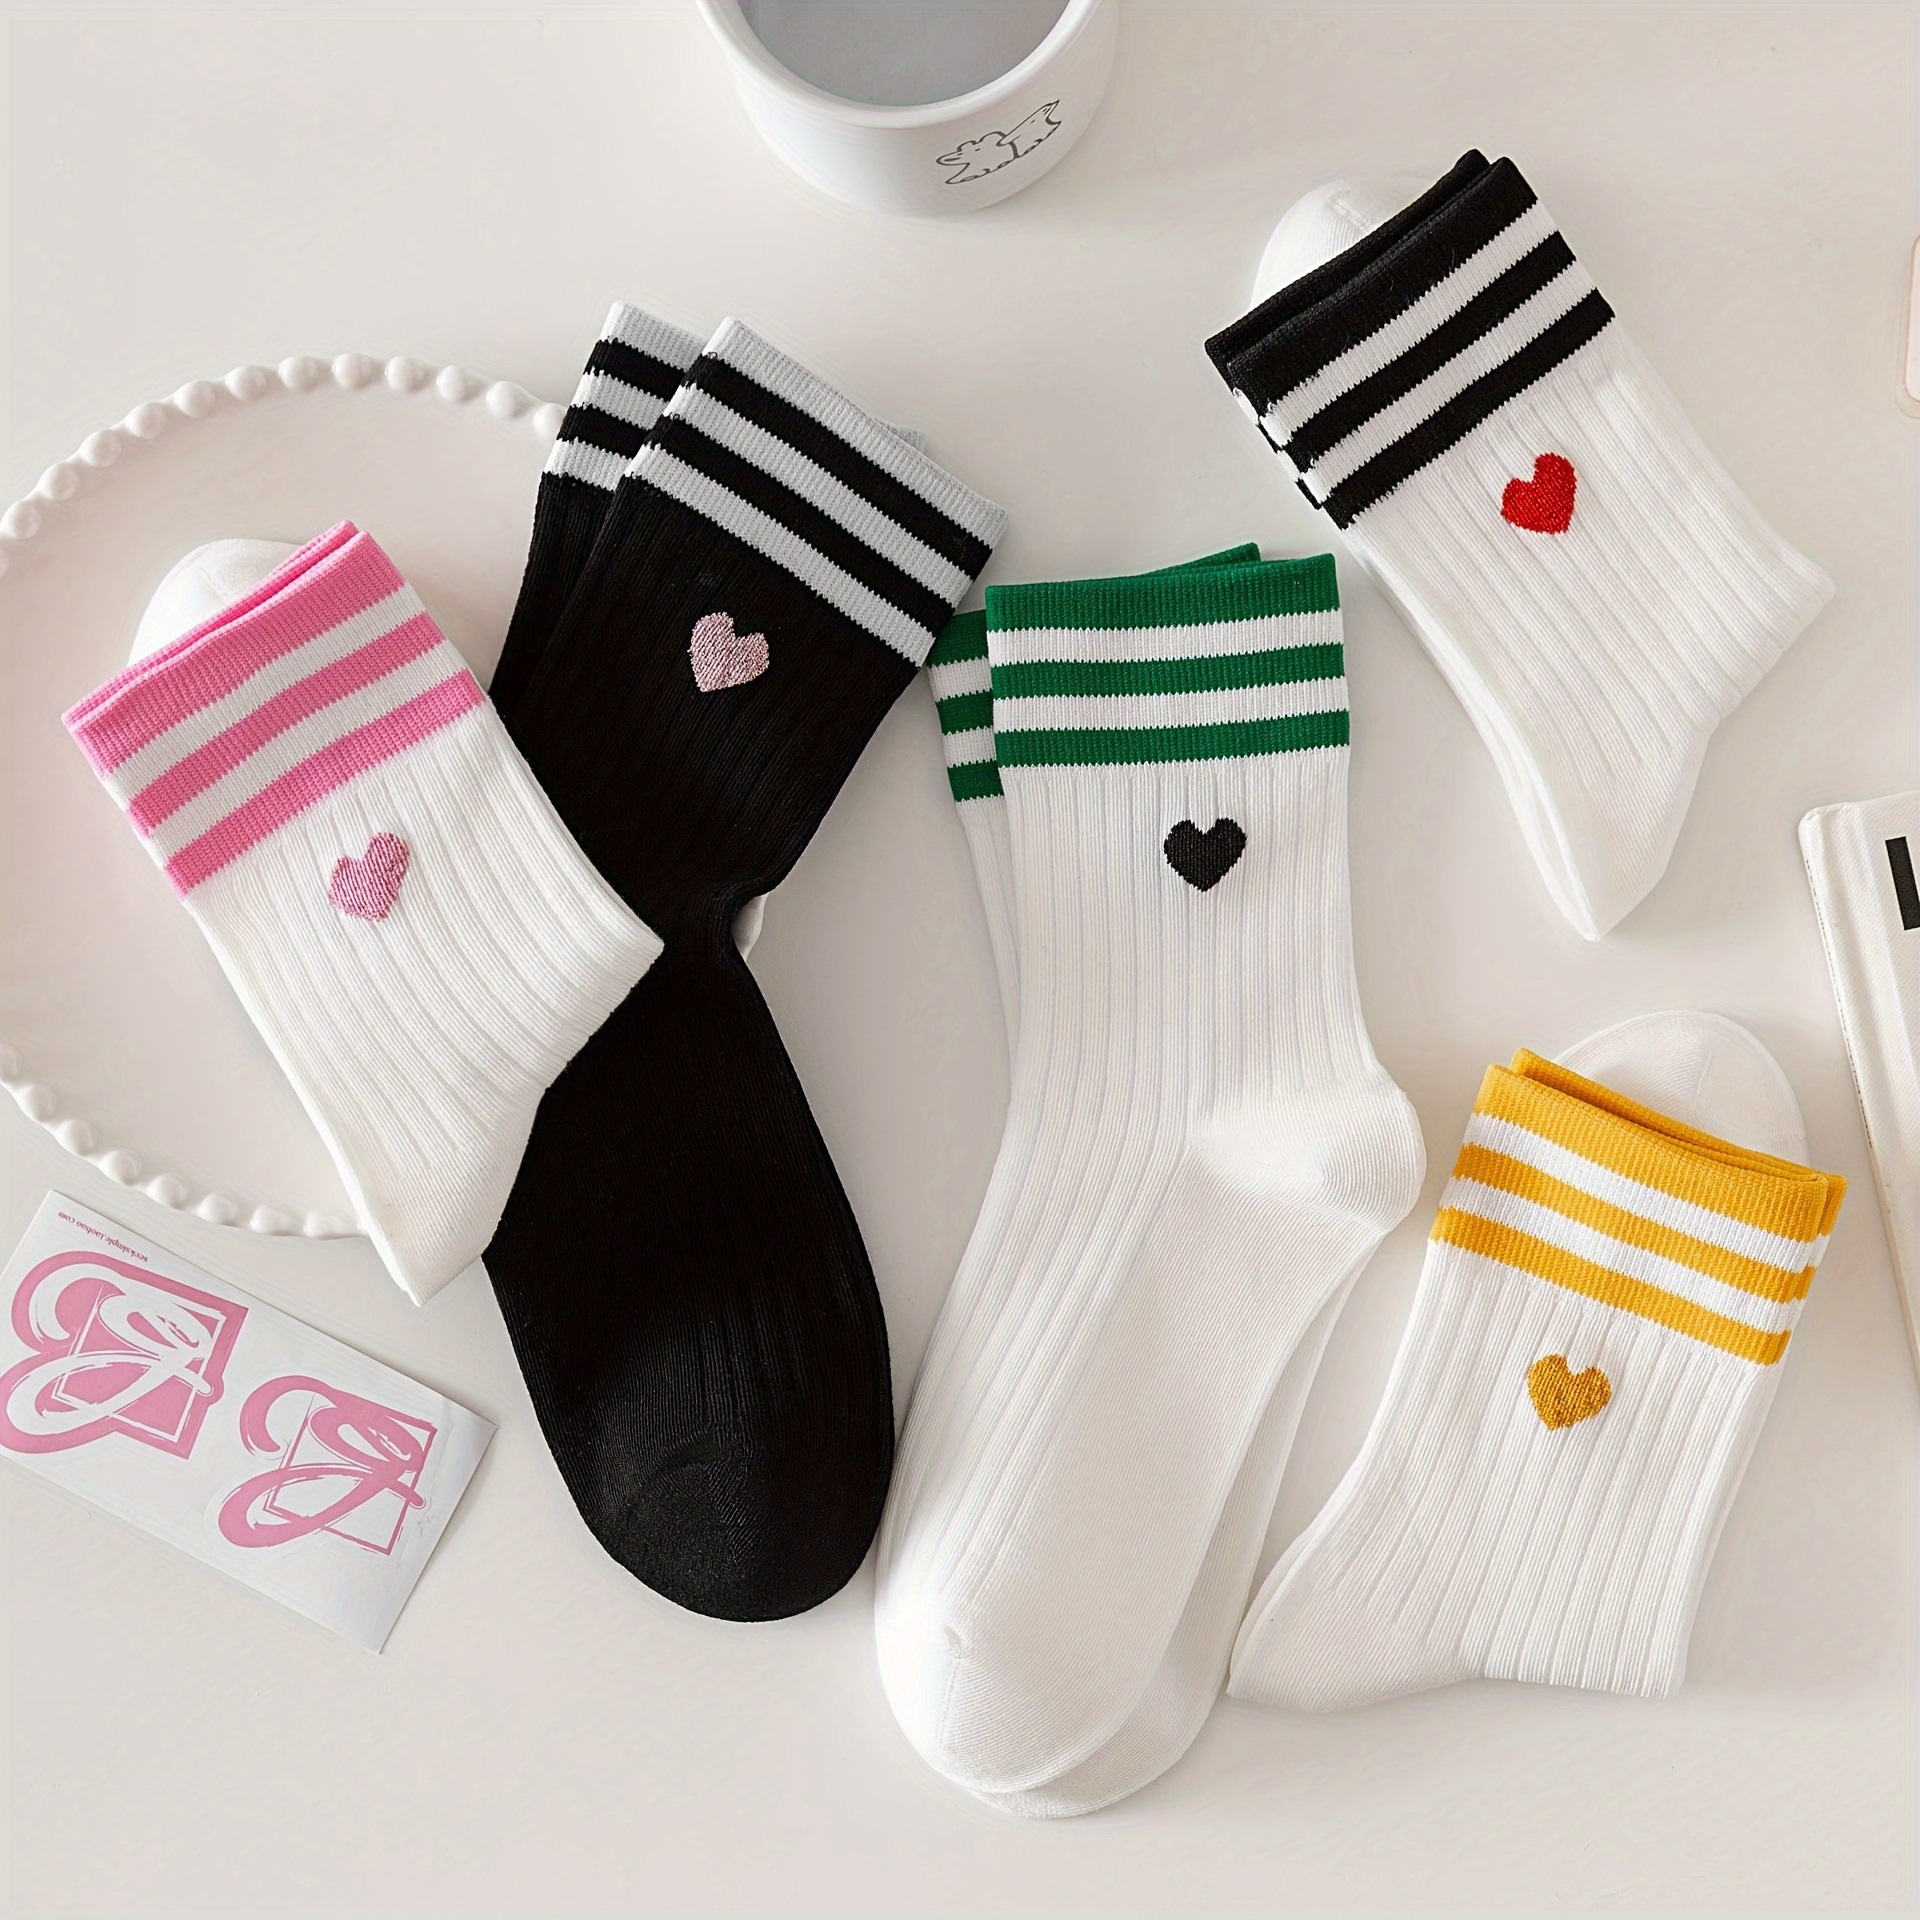 

5 Pairs Heart & Striped Socks, Cute College Style Mid Tube Socks For Fall & Winter, Women's Stockings & Hosiery